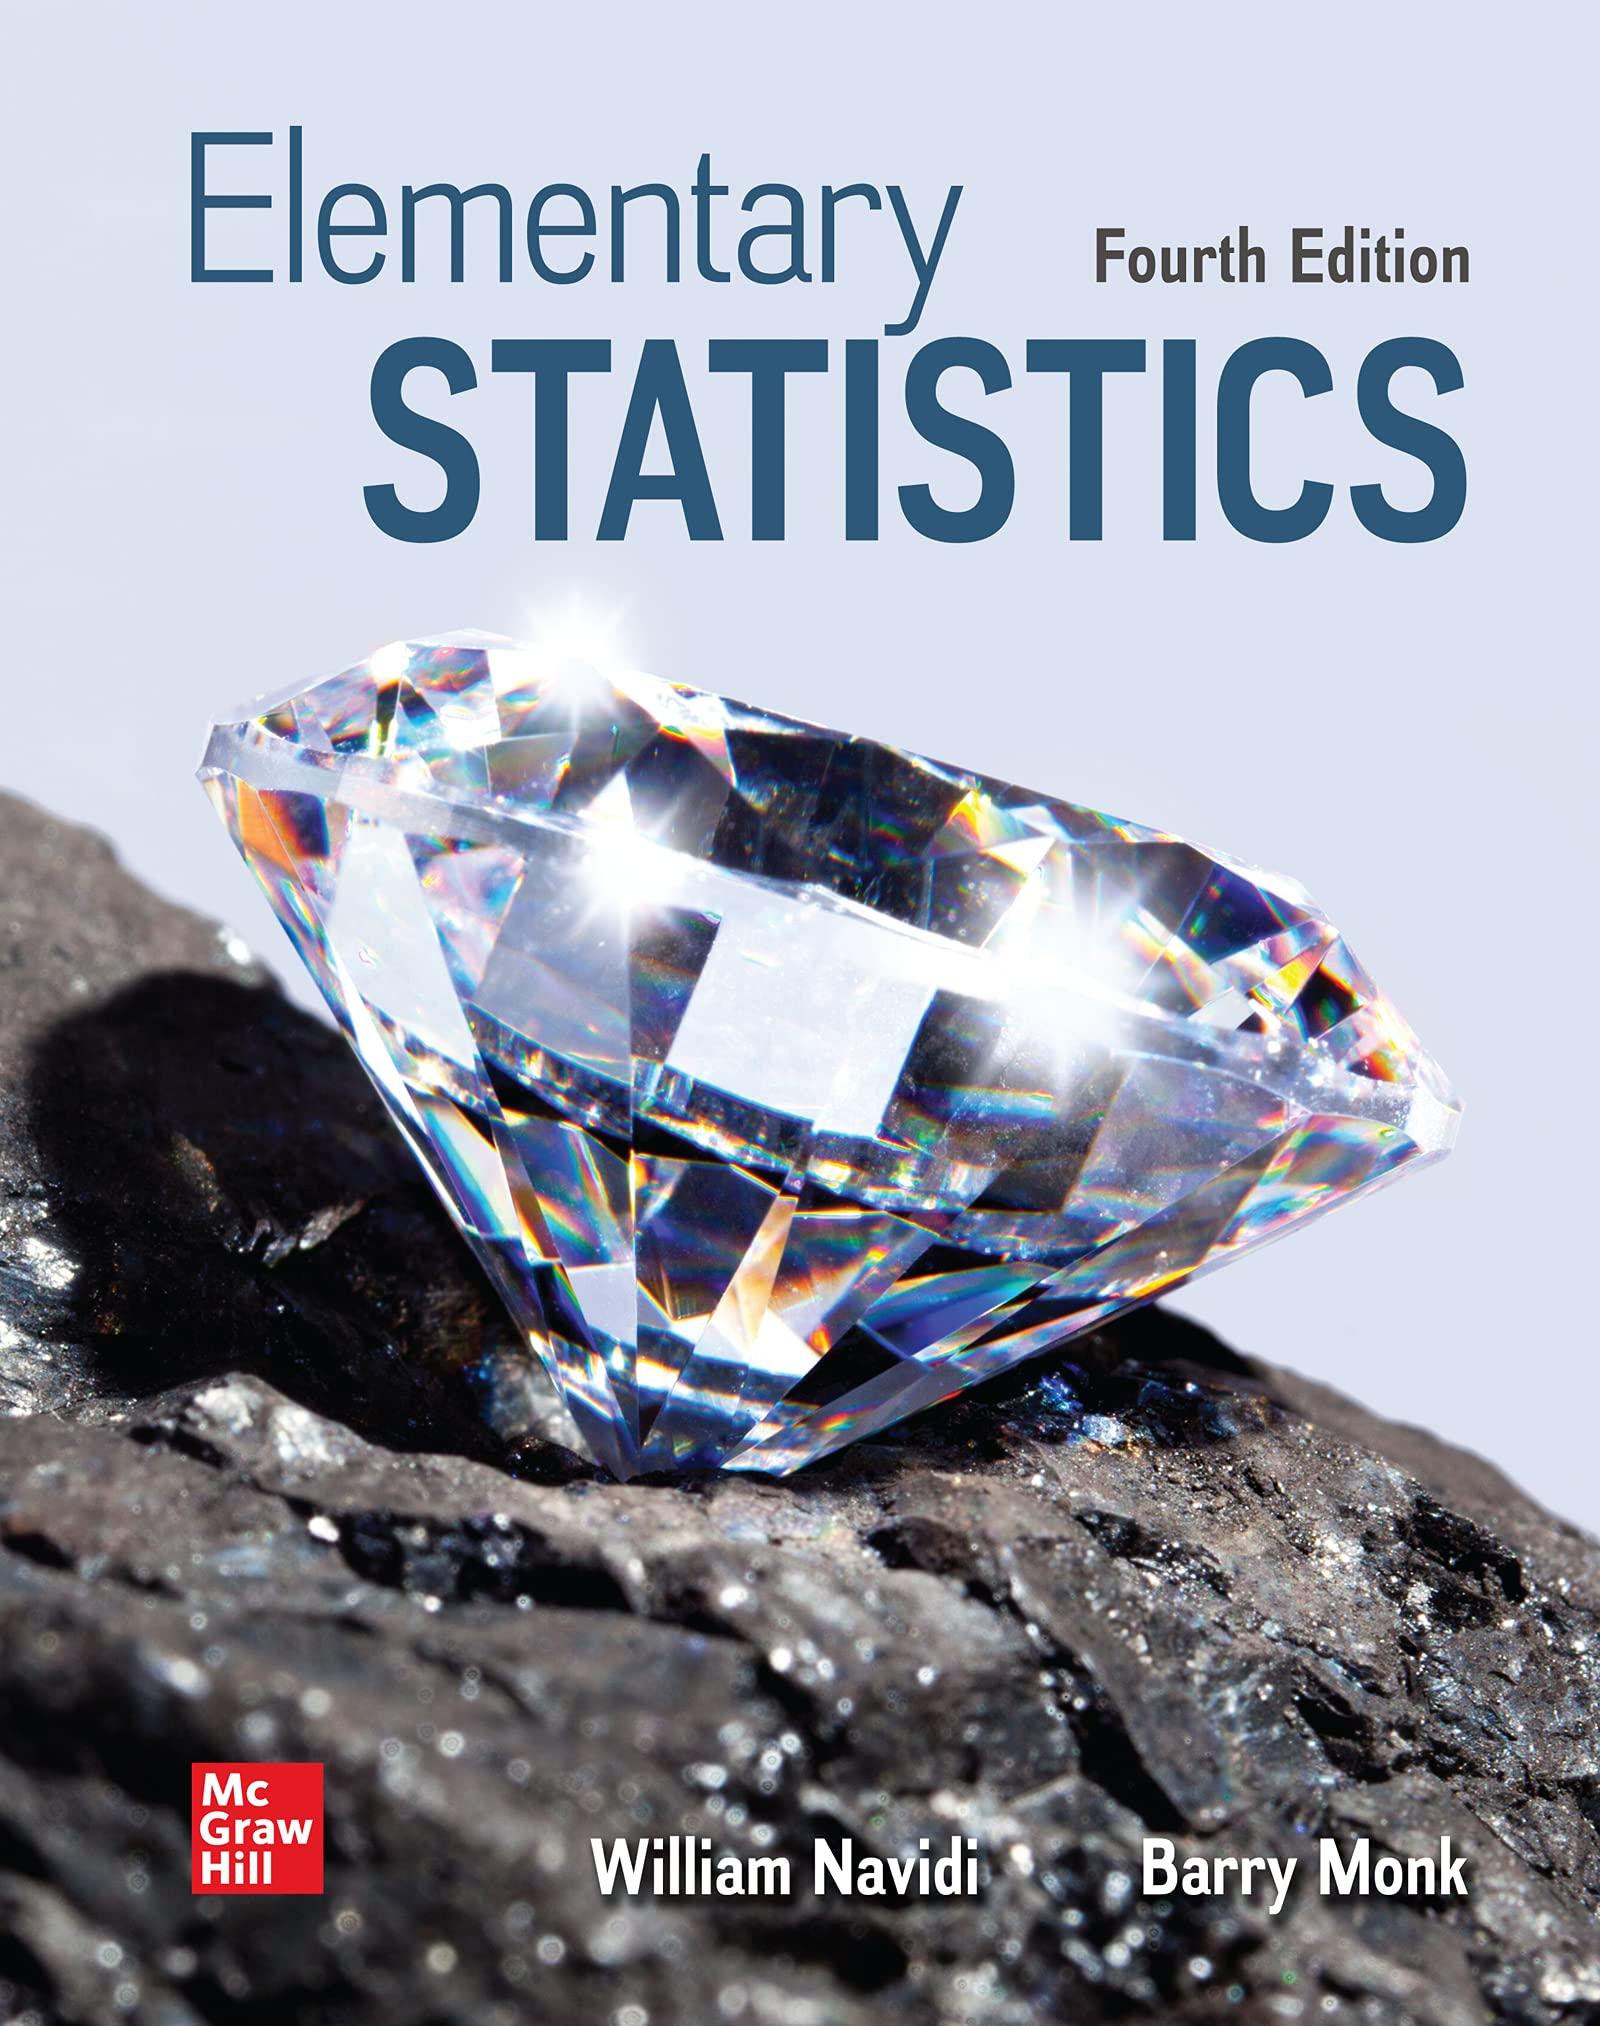 elementary statistics 4th edition william navidi, barry monk 1260727874, 9781260727876